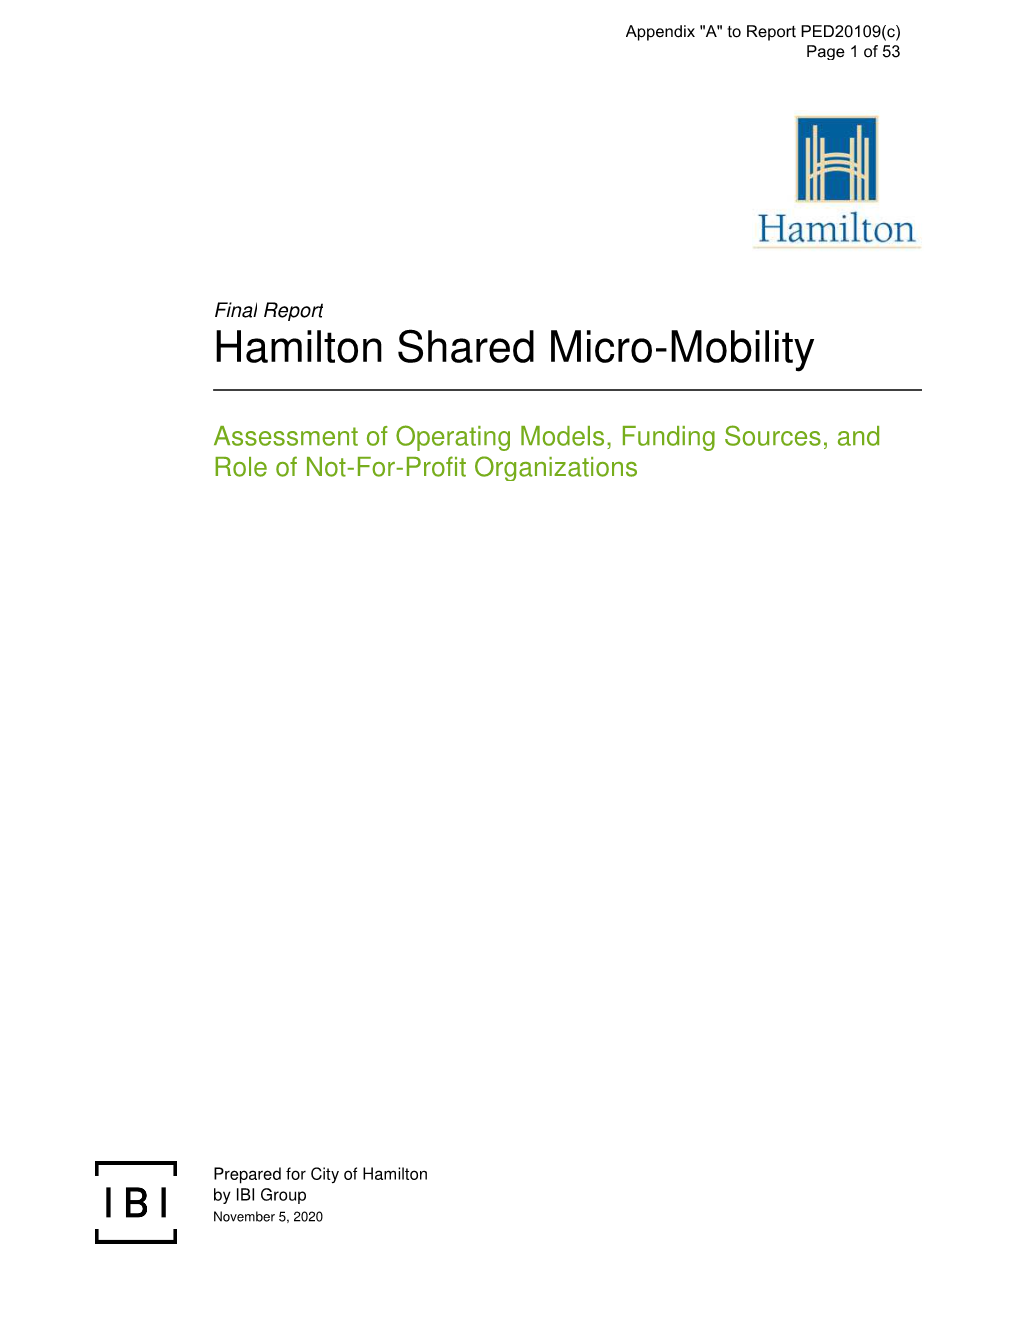 Hamilton Shared Micro-Mobility